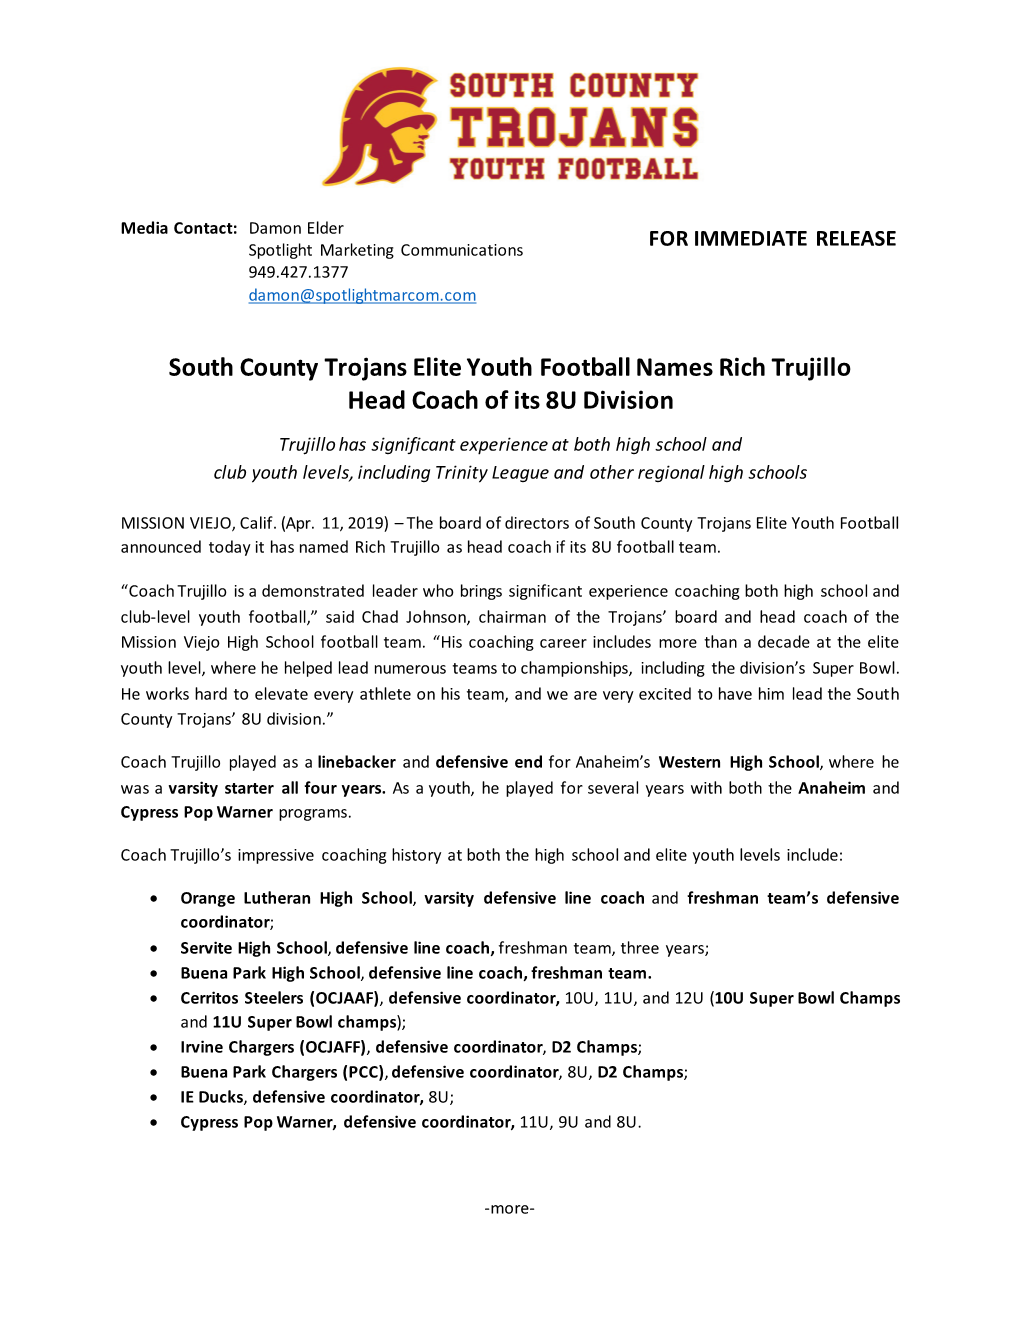 South County Trojans Elite Youth Football Names Rich Trujillo Head Coach of Its 8U Division